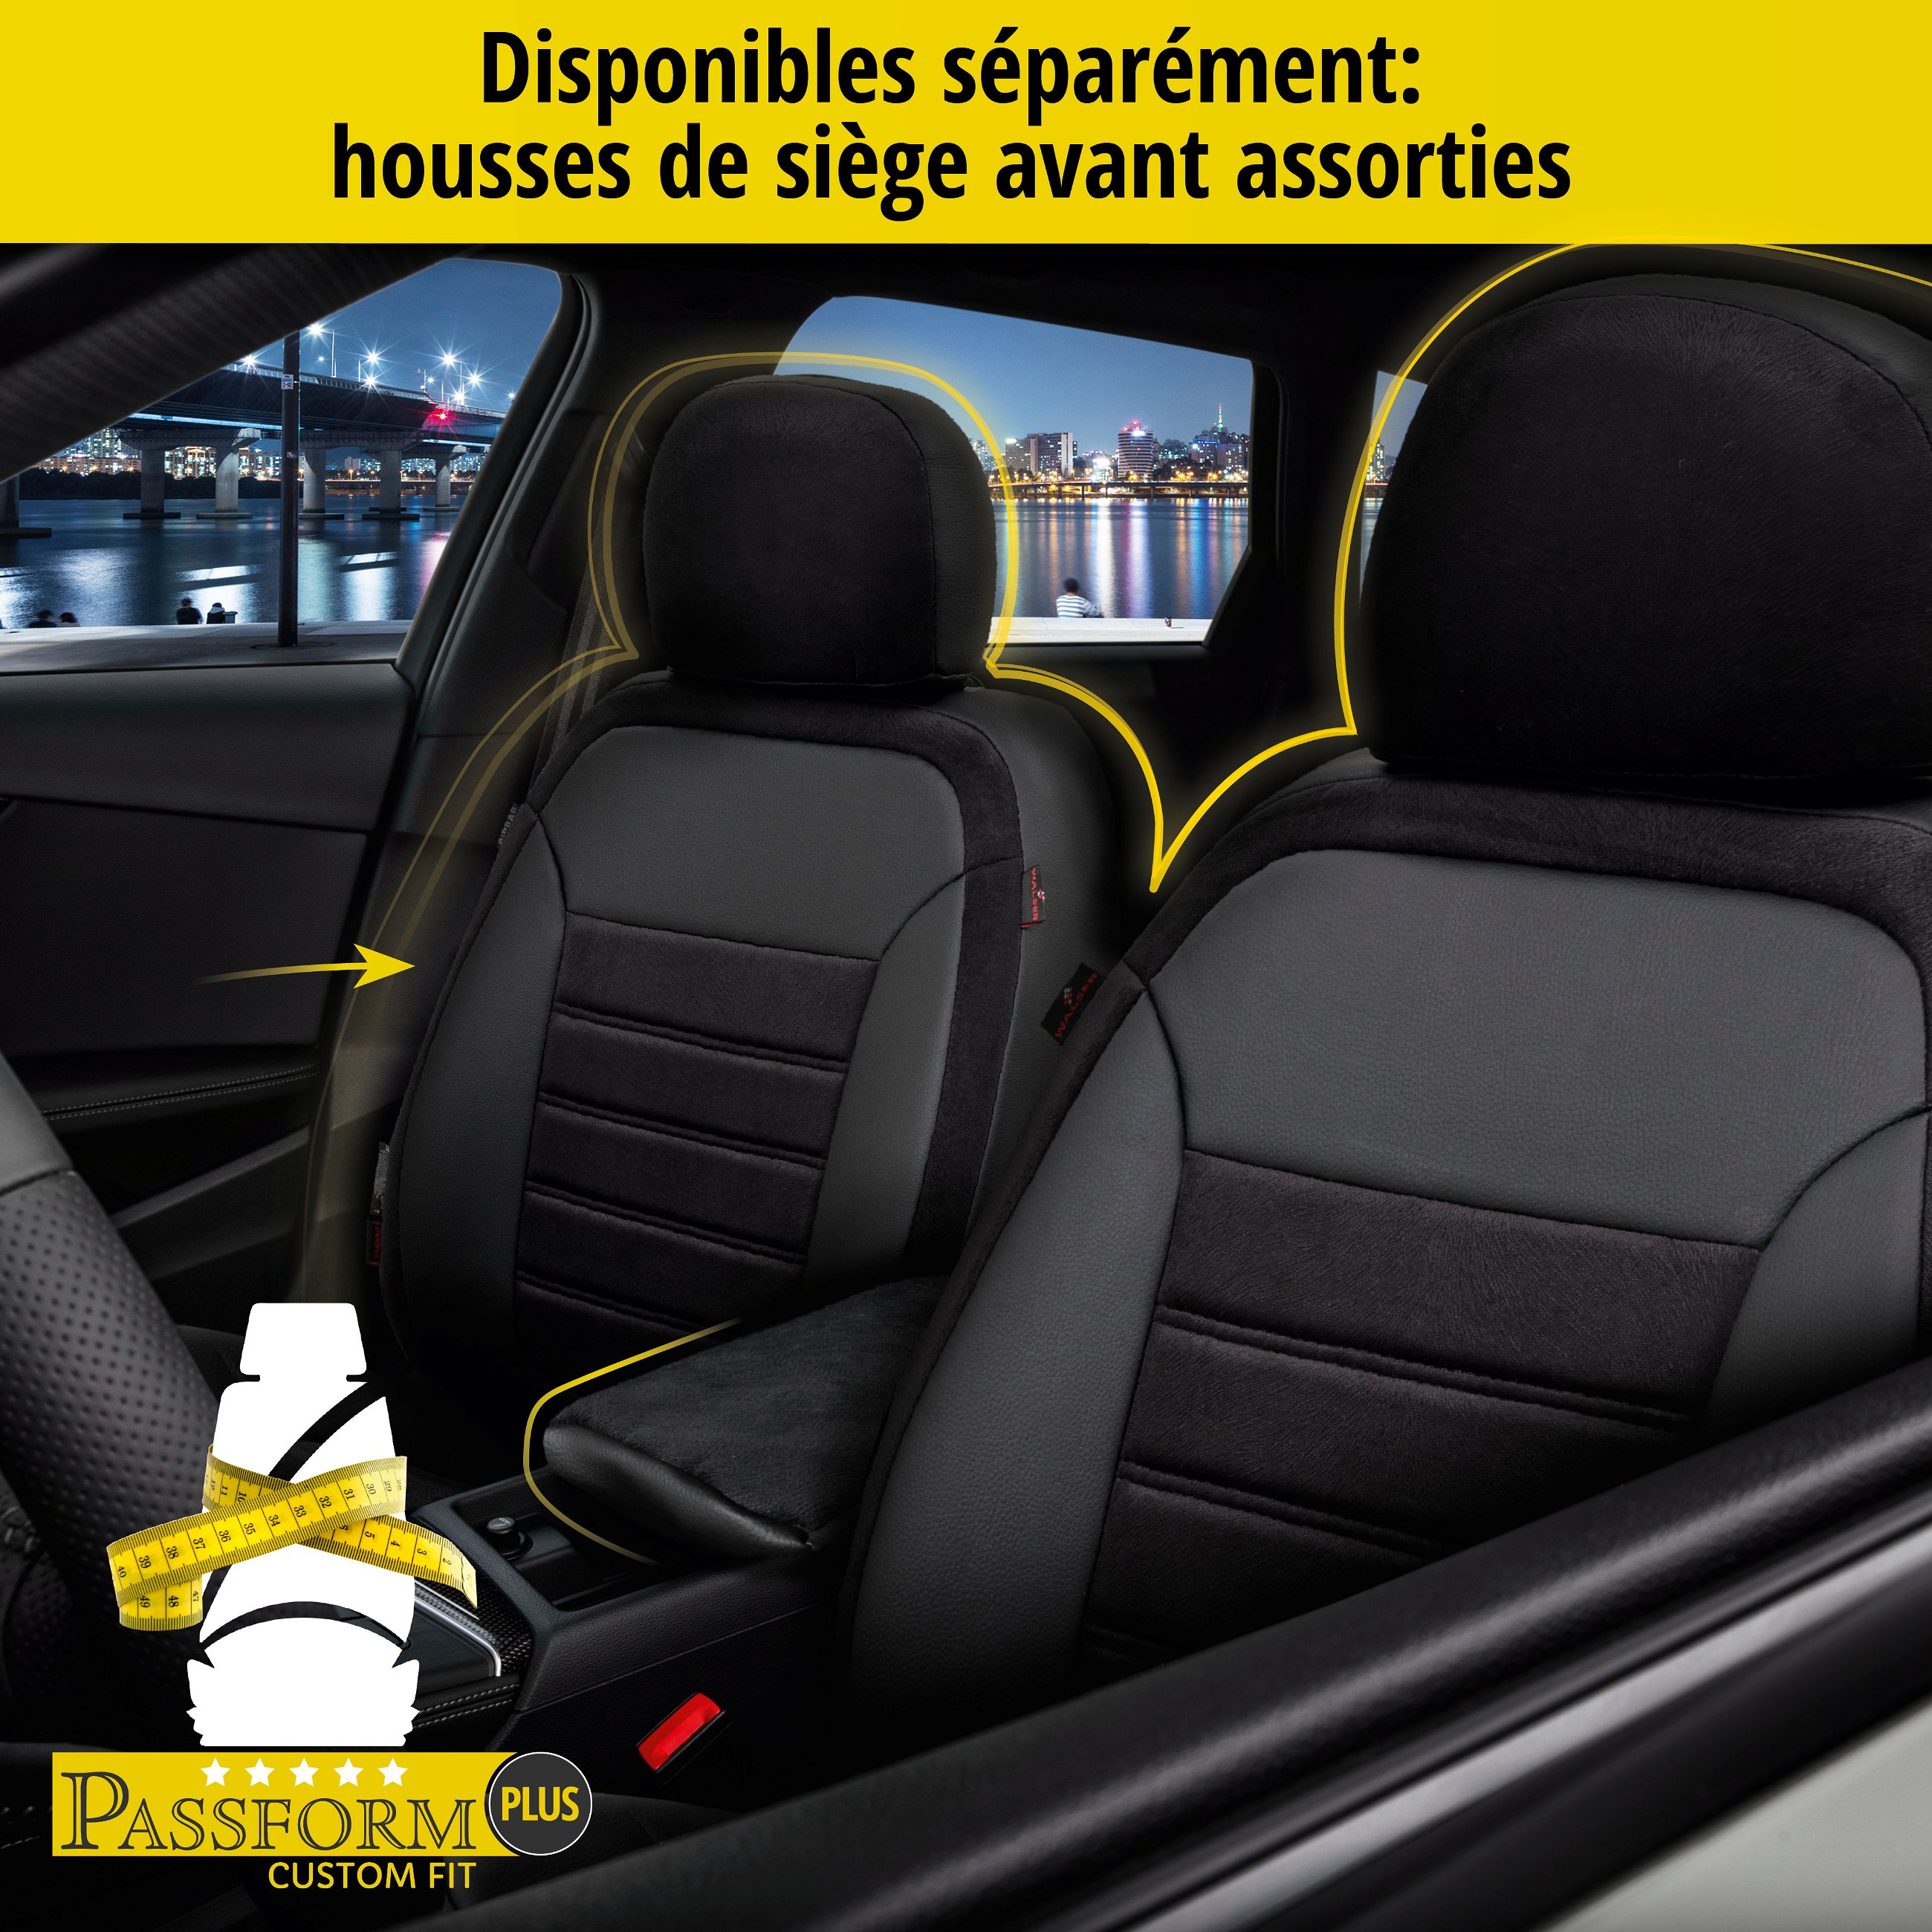 Housse de siège Bari pour Opel Corsa E (X15) 09/2014-auj., 1 housse de siège arrière pour les sièges normaux